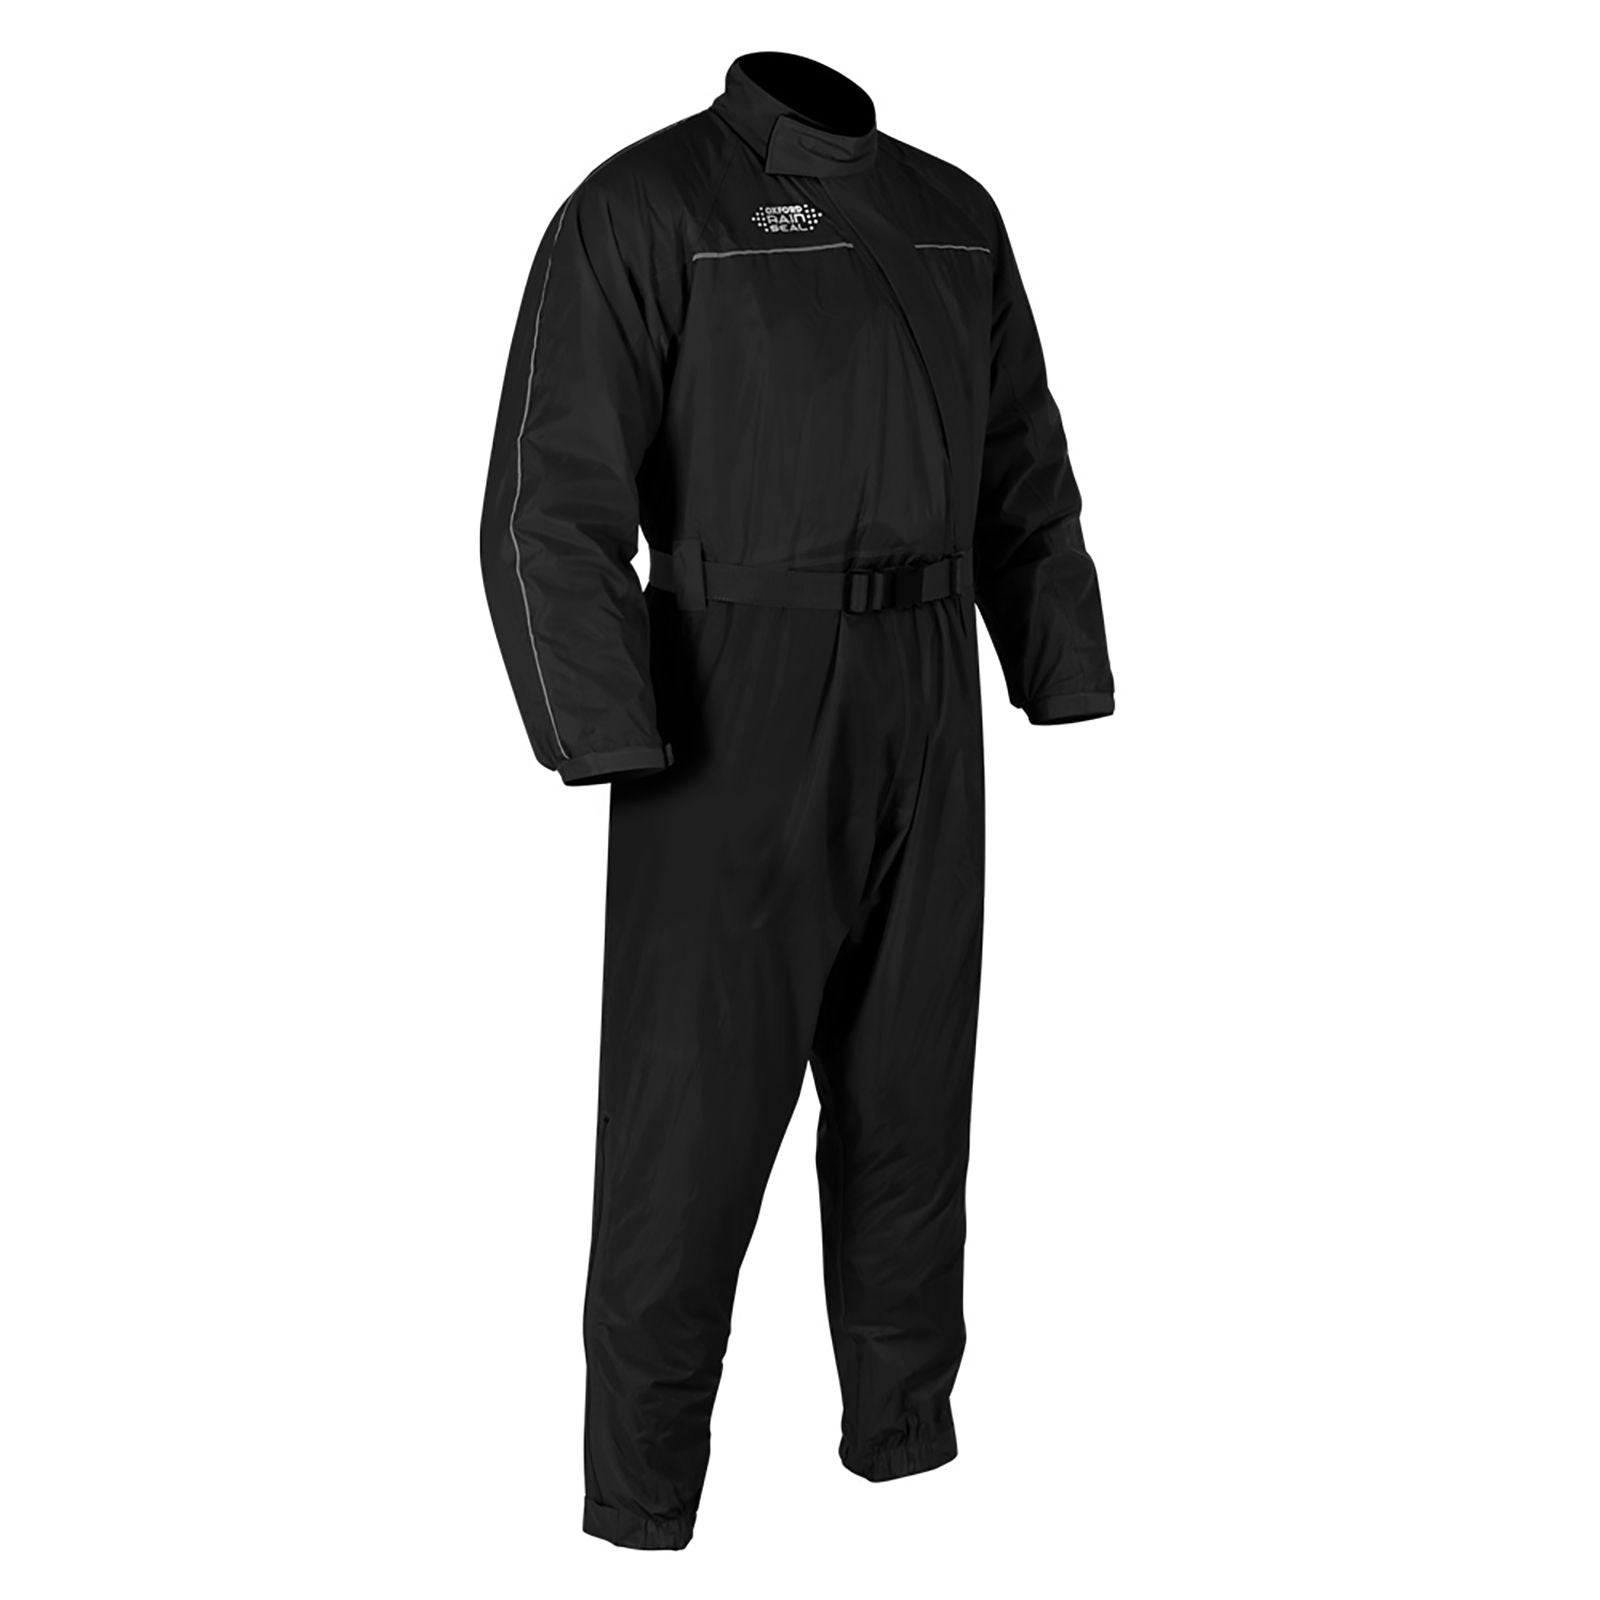 New OXFORD Rainseal Rain Suit - Black - XL #OXRM300XL